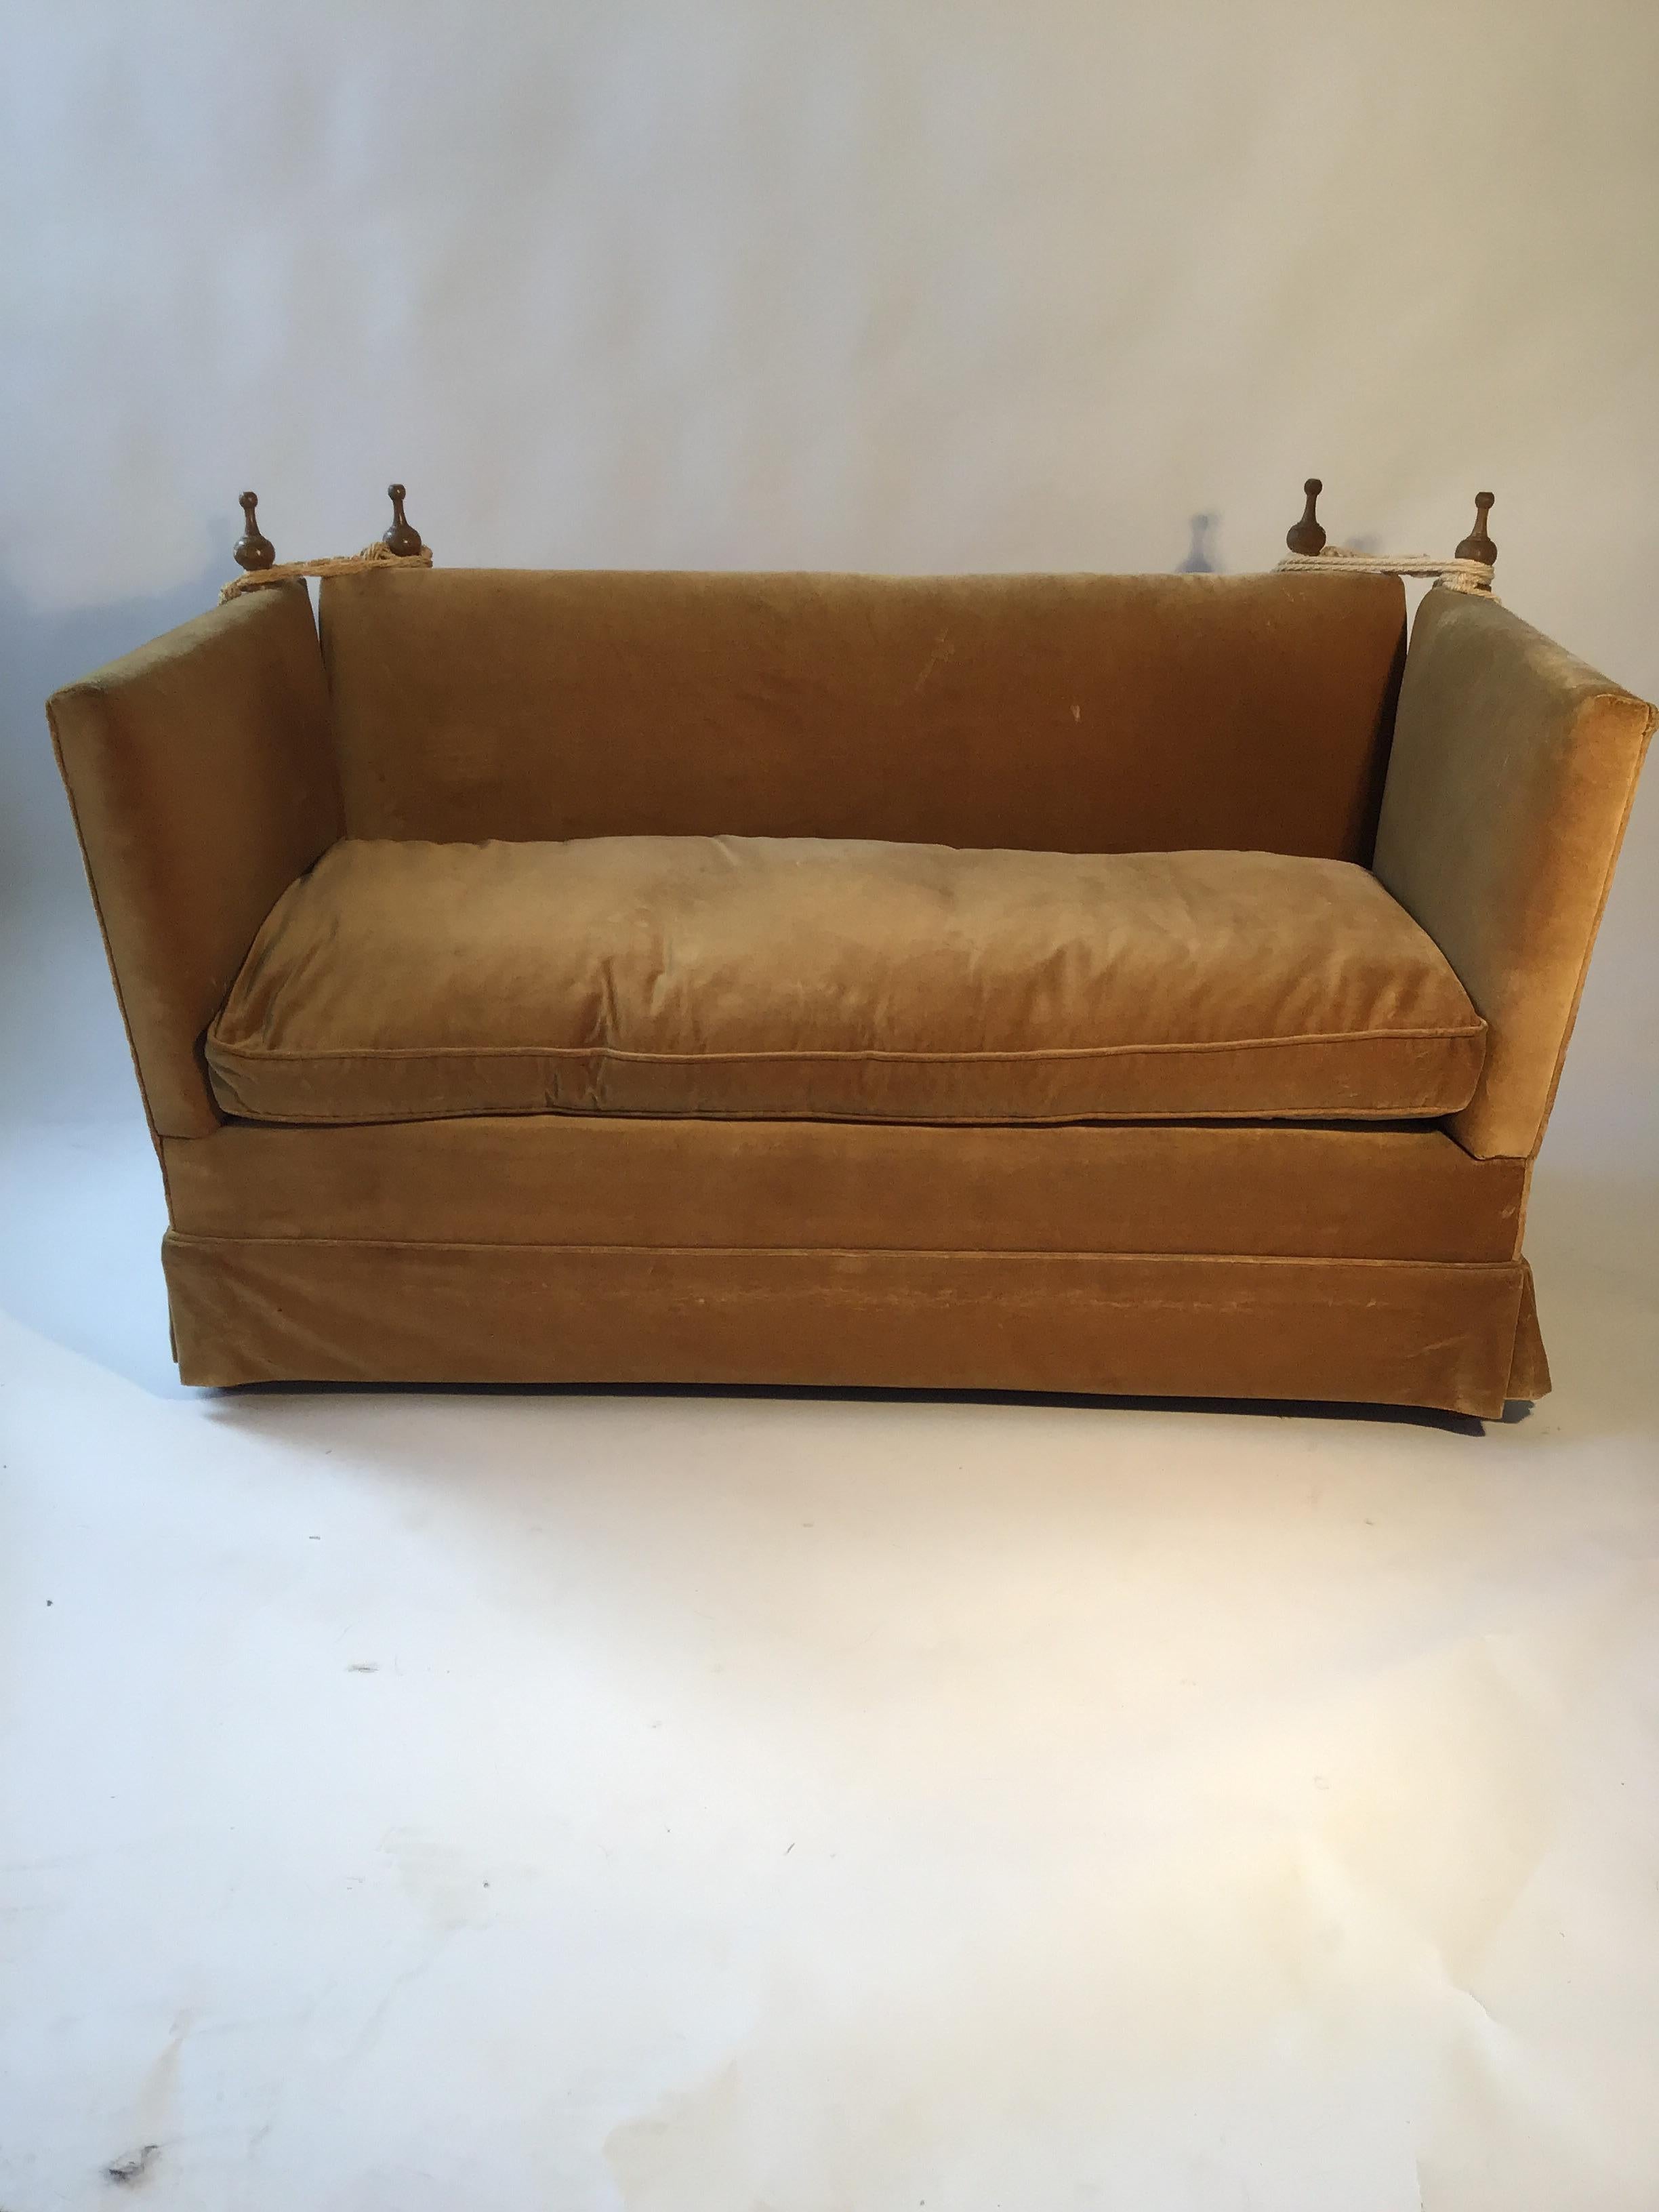 1940s Knole sofa, down cushion, needs reupholstering.